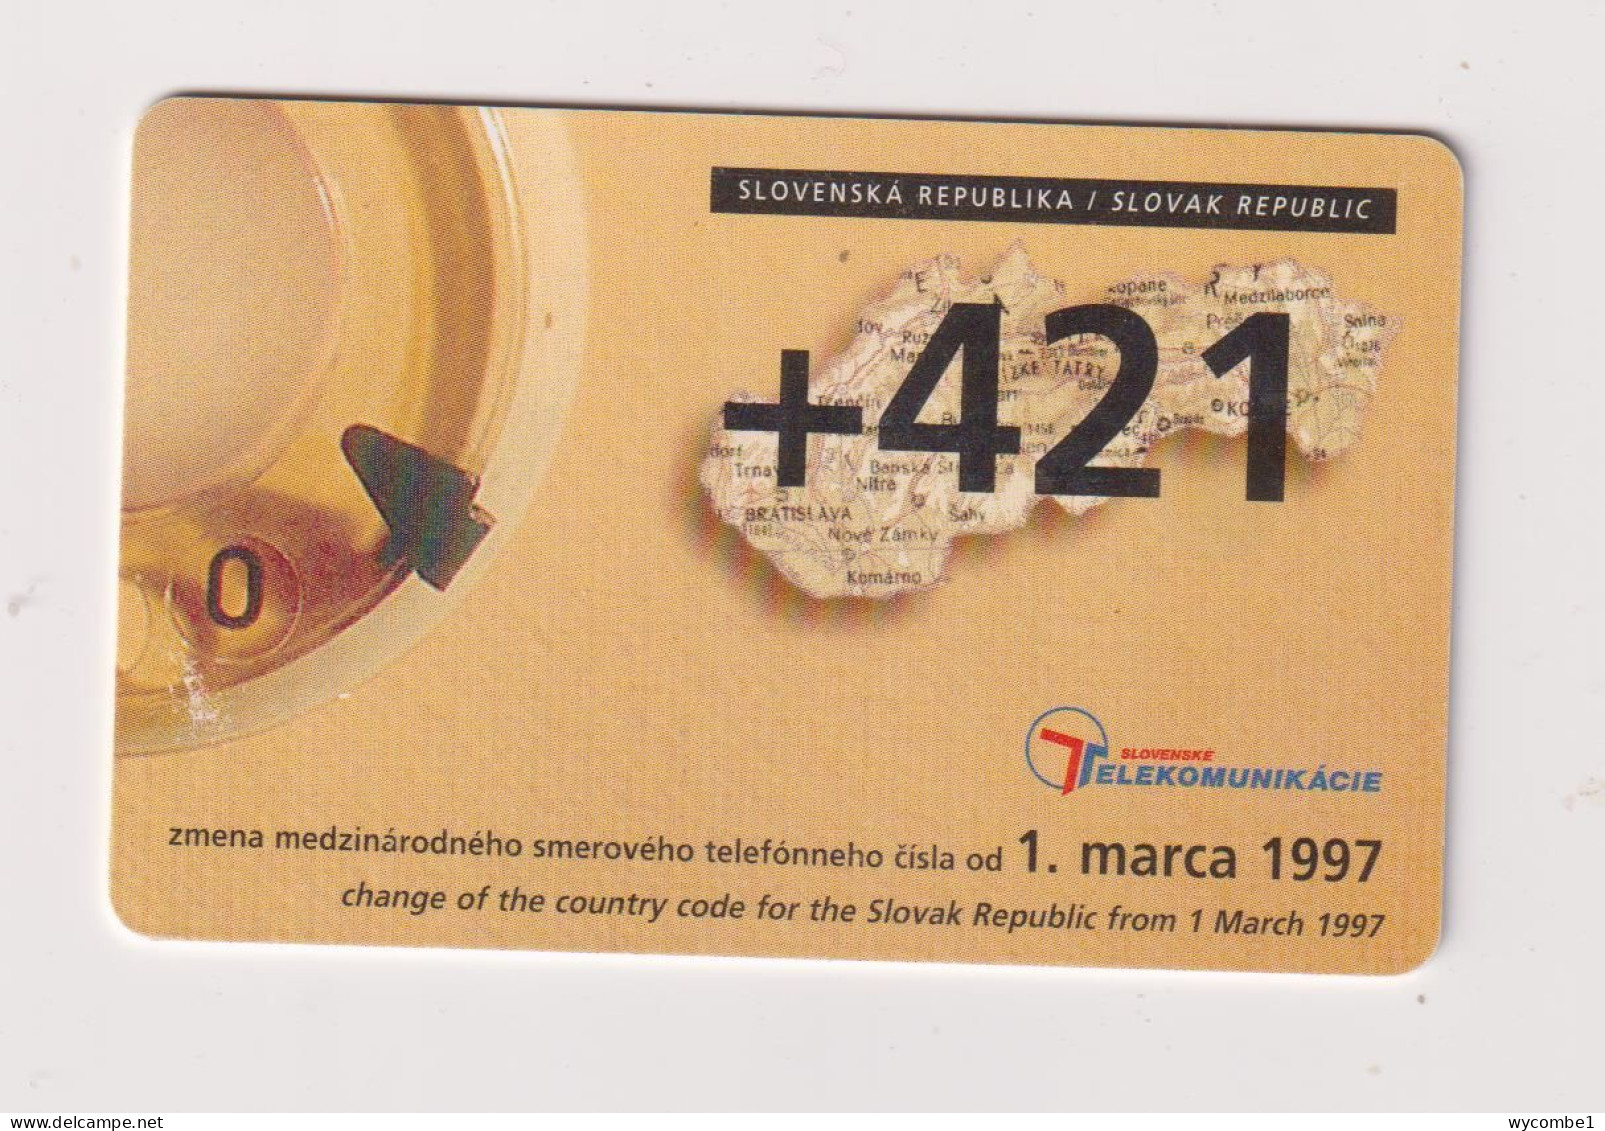 SLOVAKIA  - +421 Country Code Chip Phonecard - Slovakia